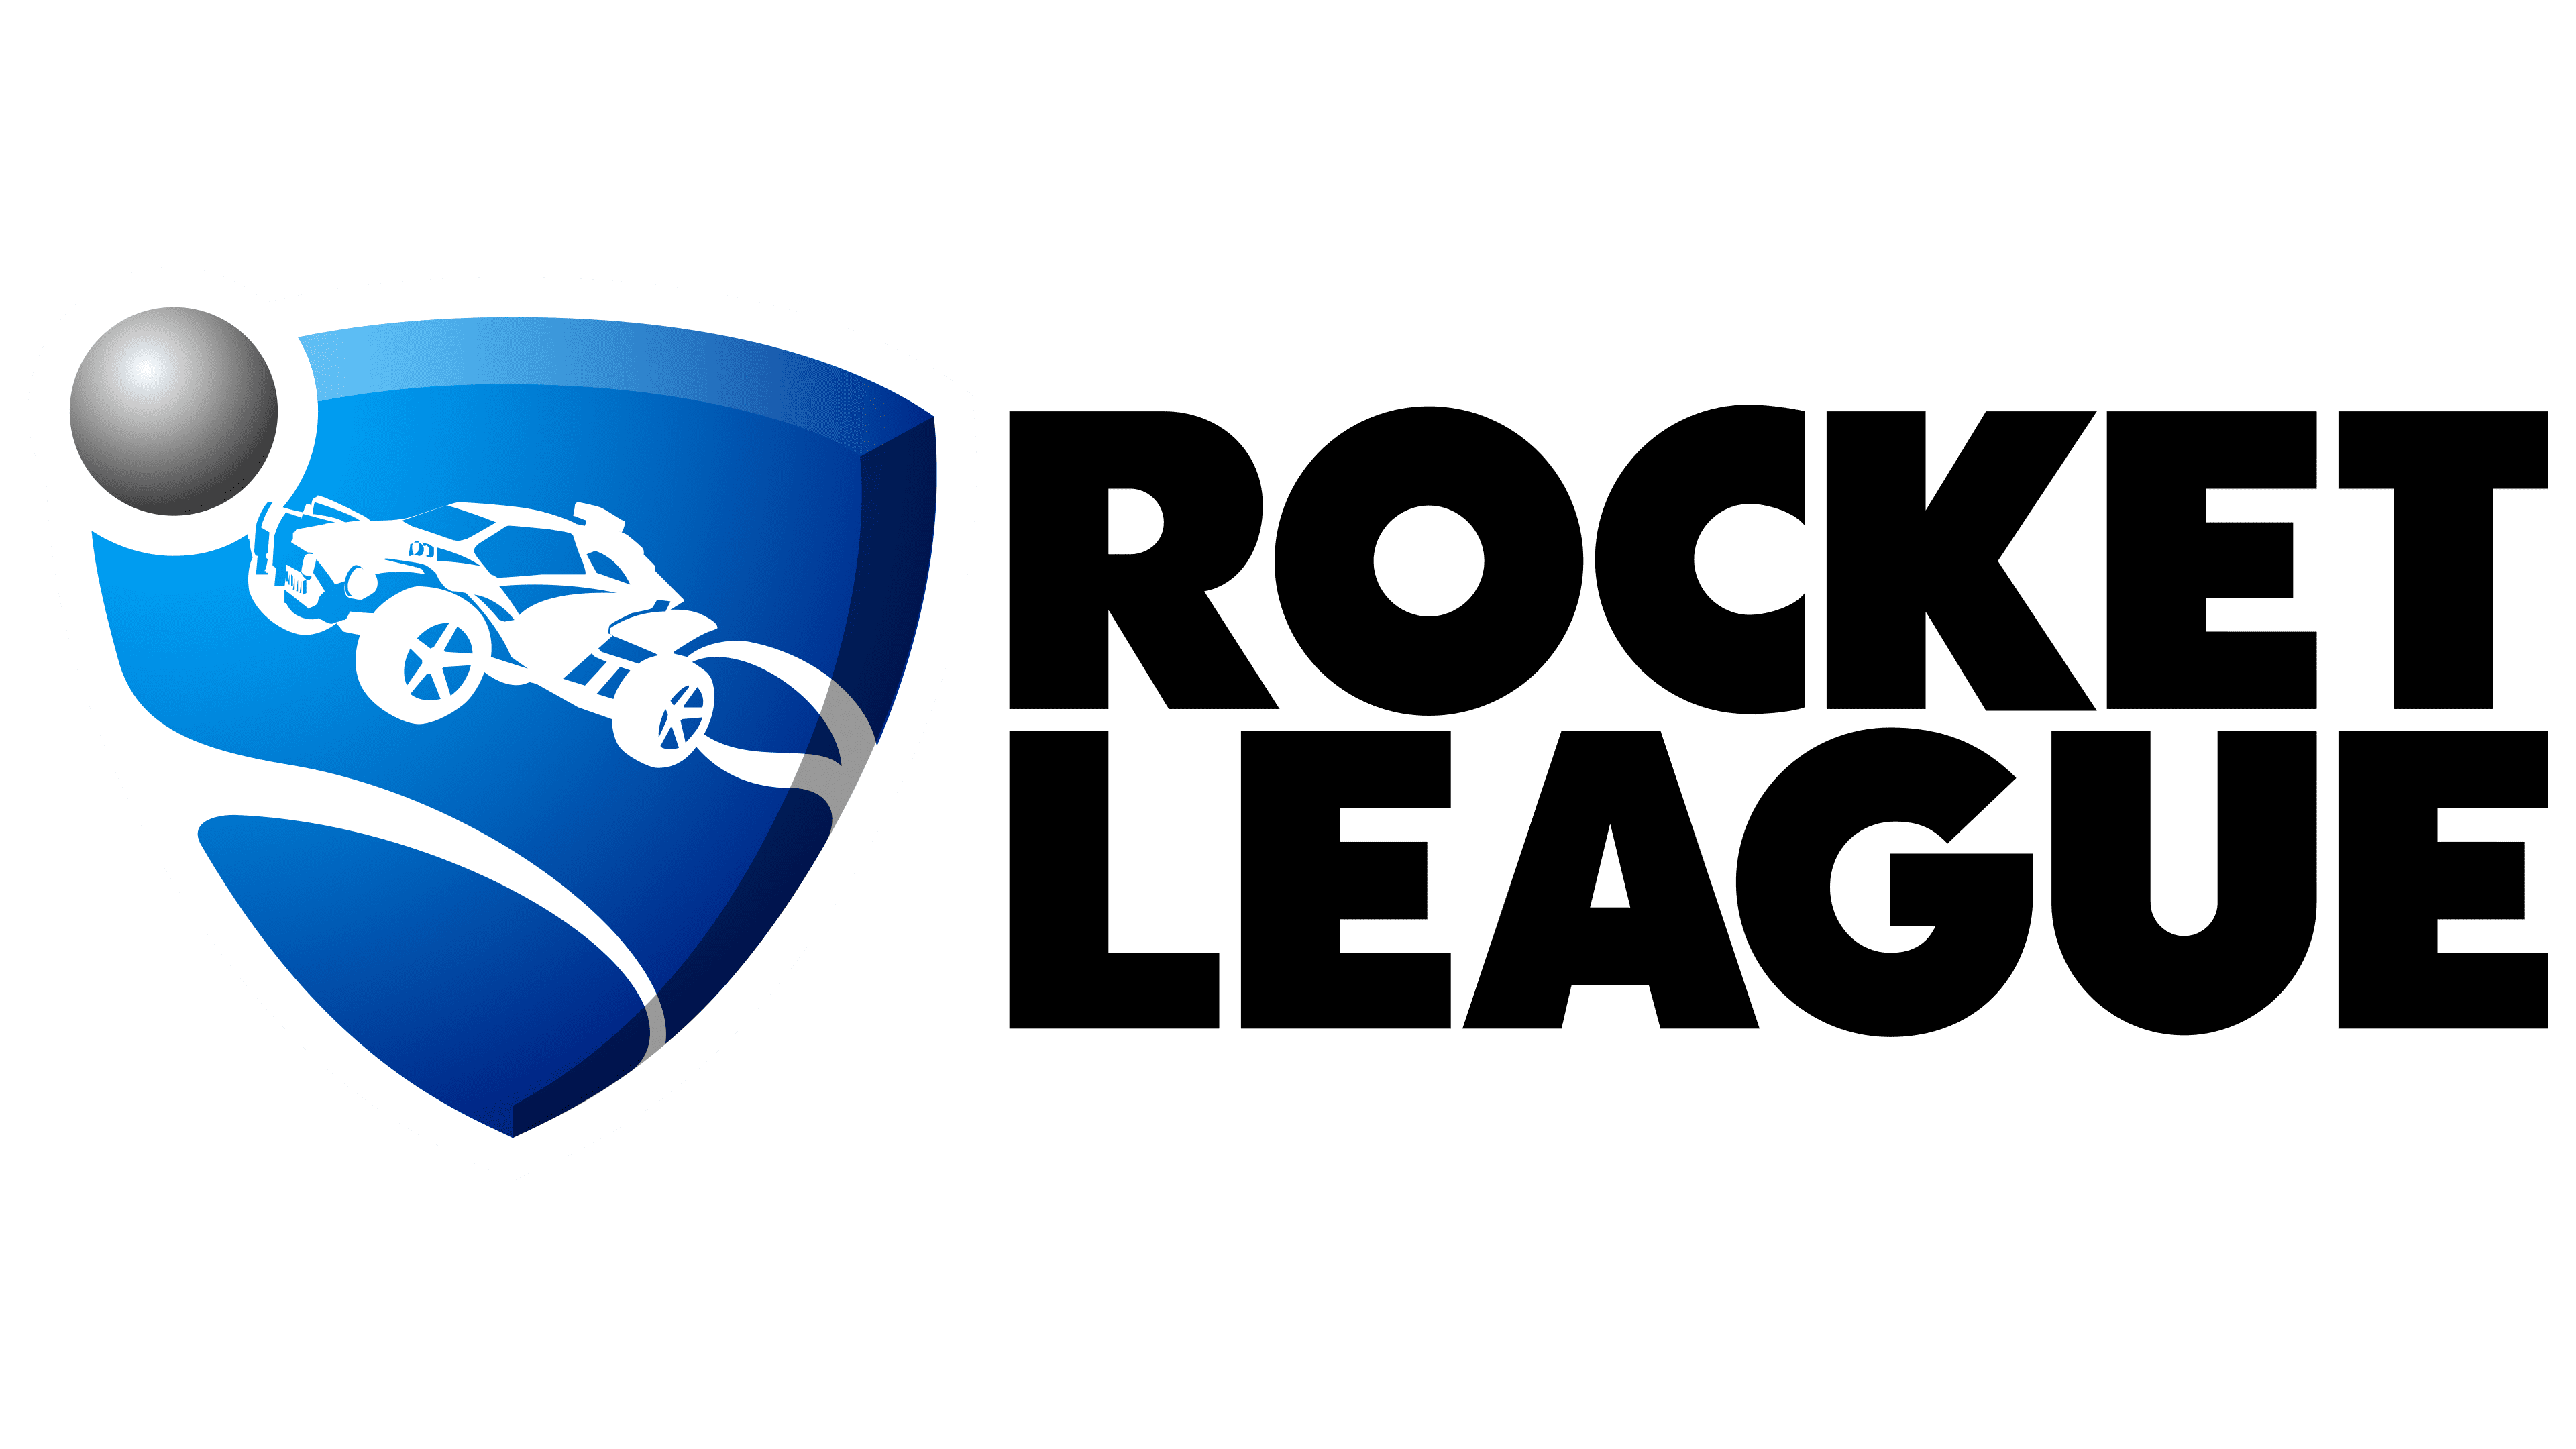 2d rocket league logo rocket league logo